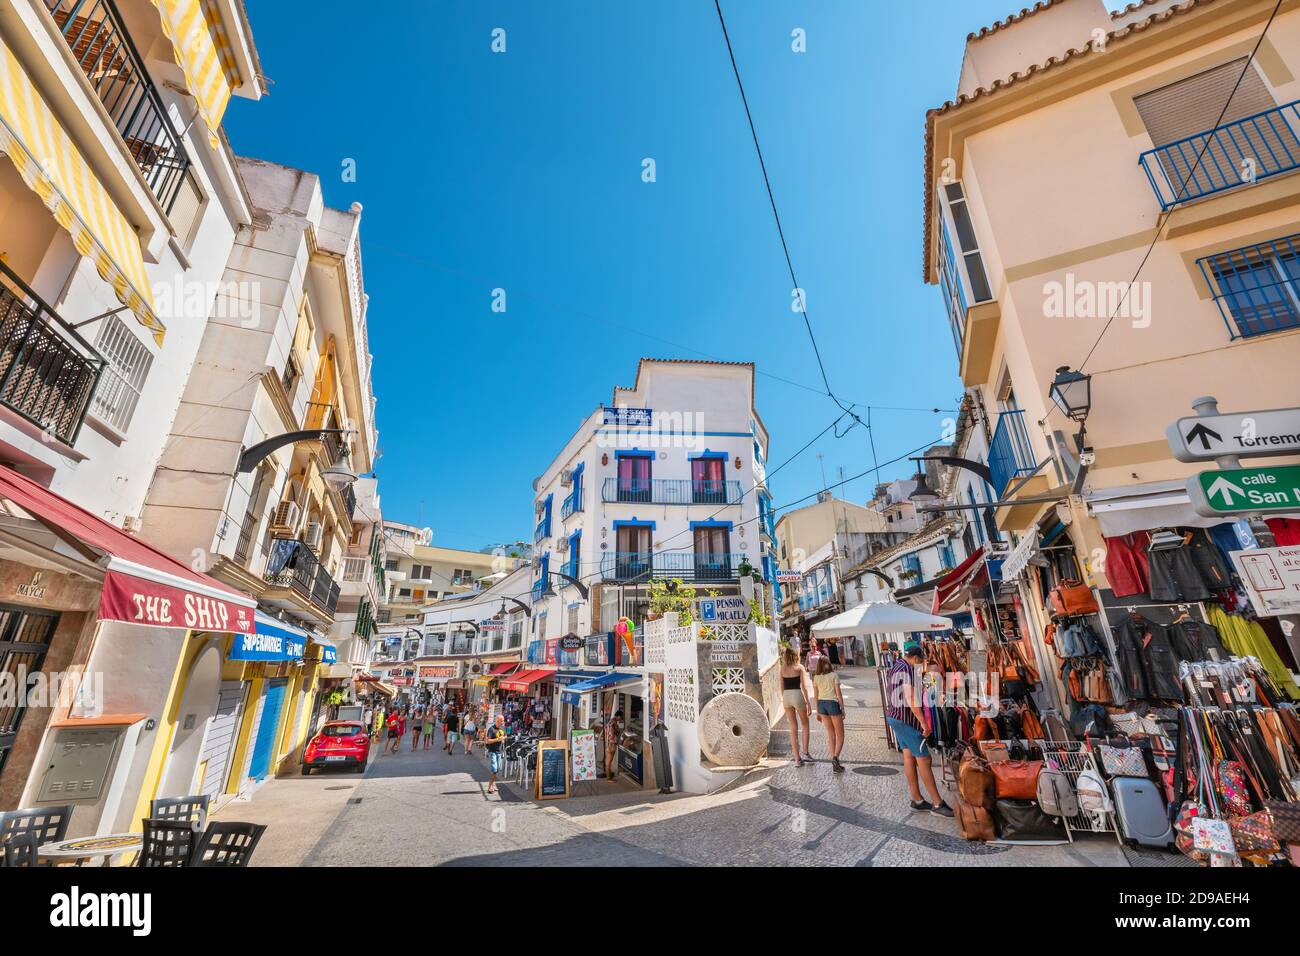 Touristes dans une rue Calle del Bajondillo. Torremolinos, Costa del sol, Andalousie, Espagne Banque D'Images